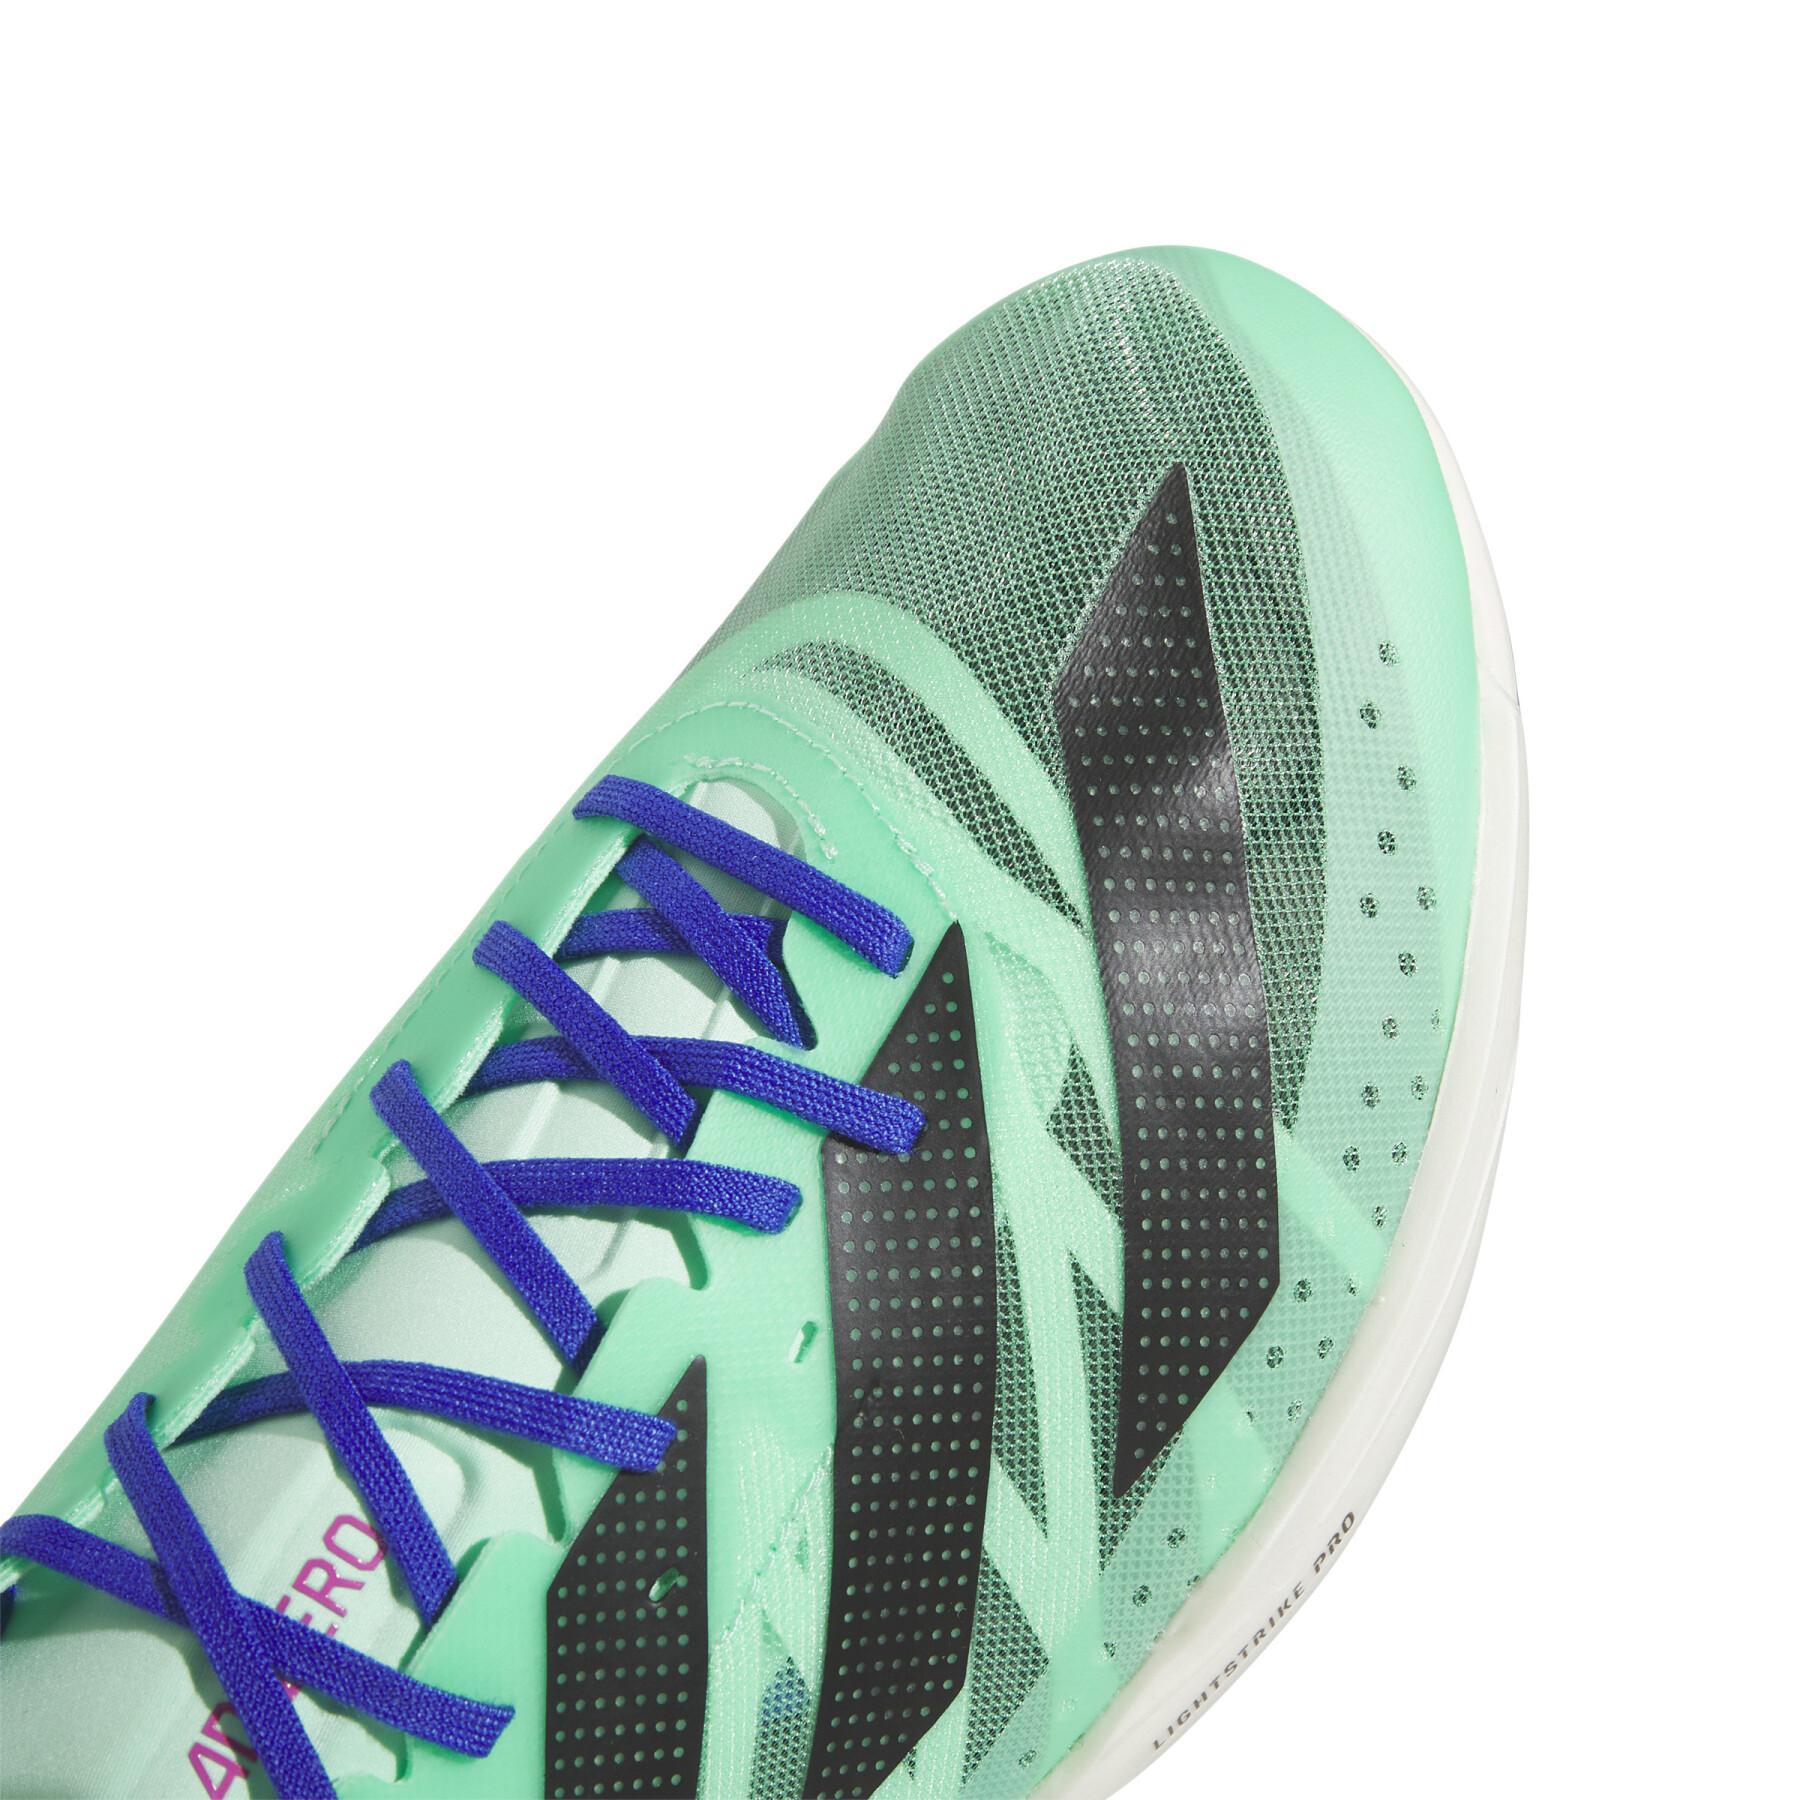 Chaussures d'athlétisme adidas Adizero Ambition